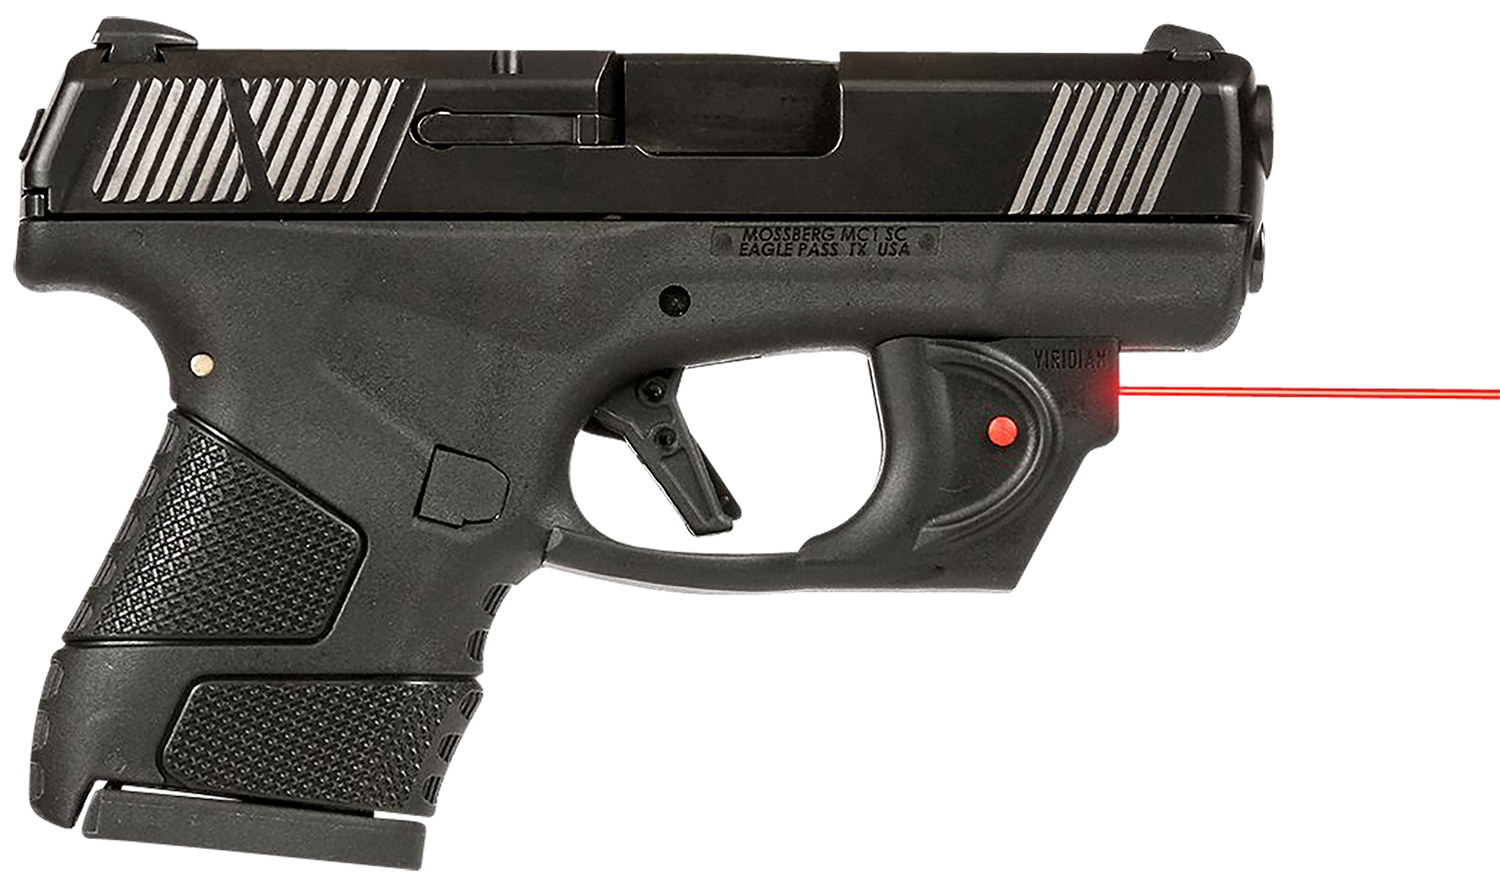 Viridian 9120020 E-Series  Black w/Red Laser Fits Mossberg MC1sc Handgun